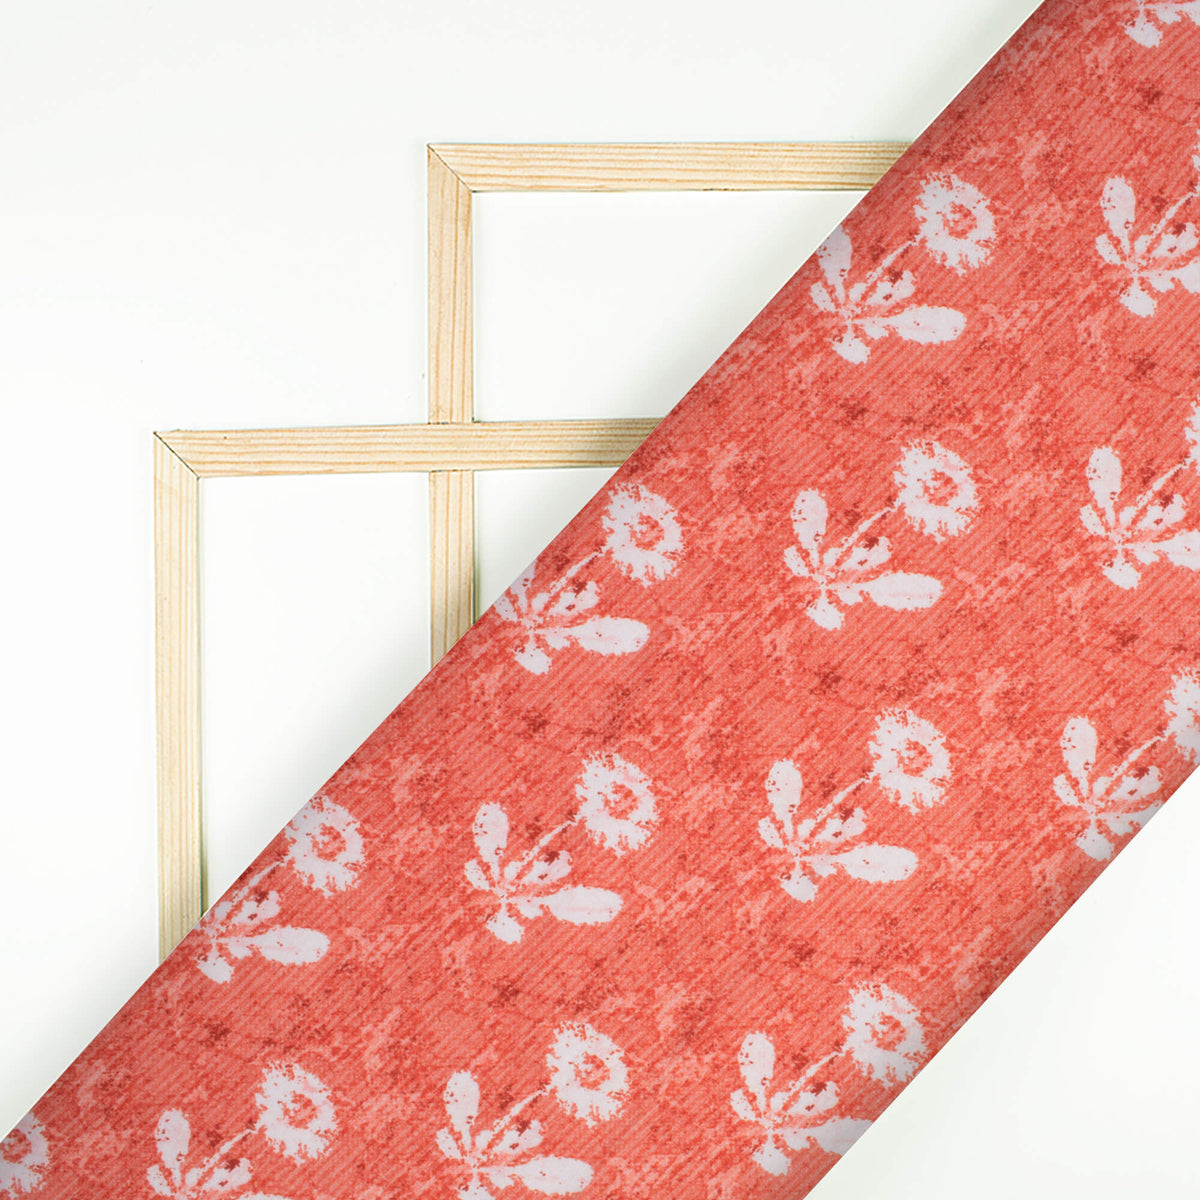 Dark Umber Orange And White Floral Pattern Digital Print Premium Lush Satin Fabric